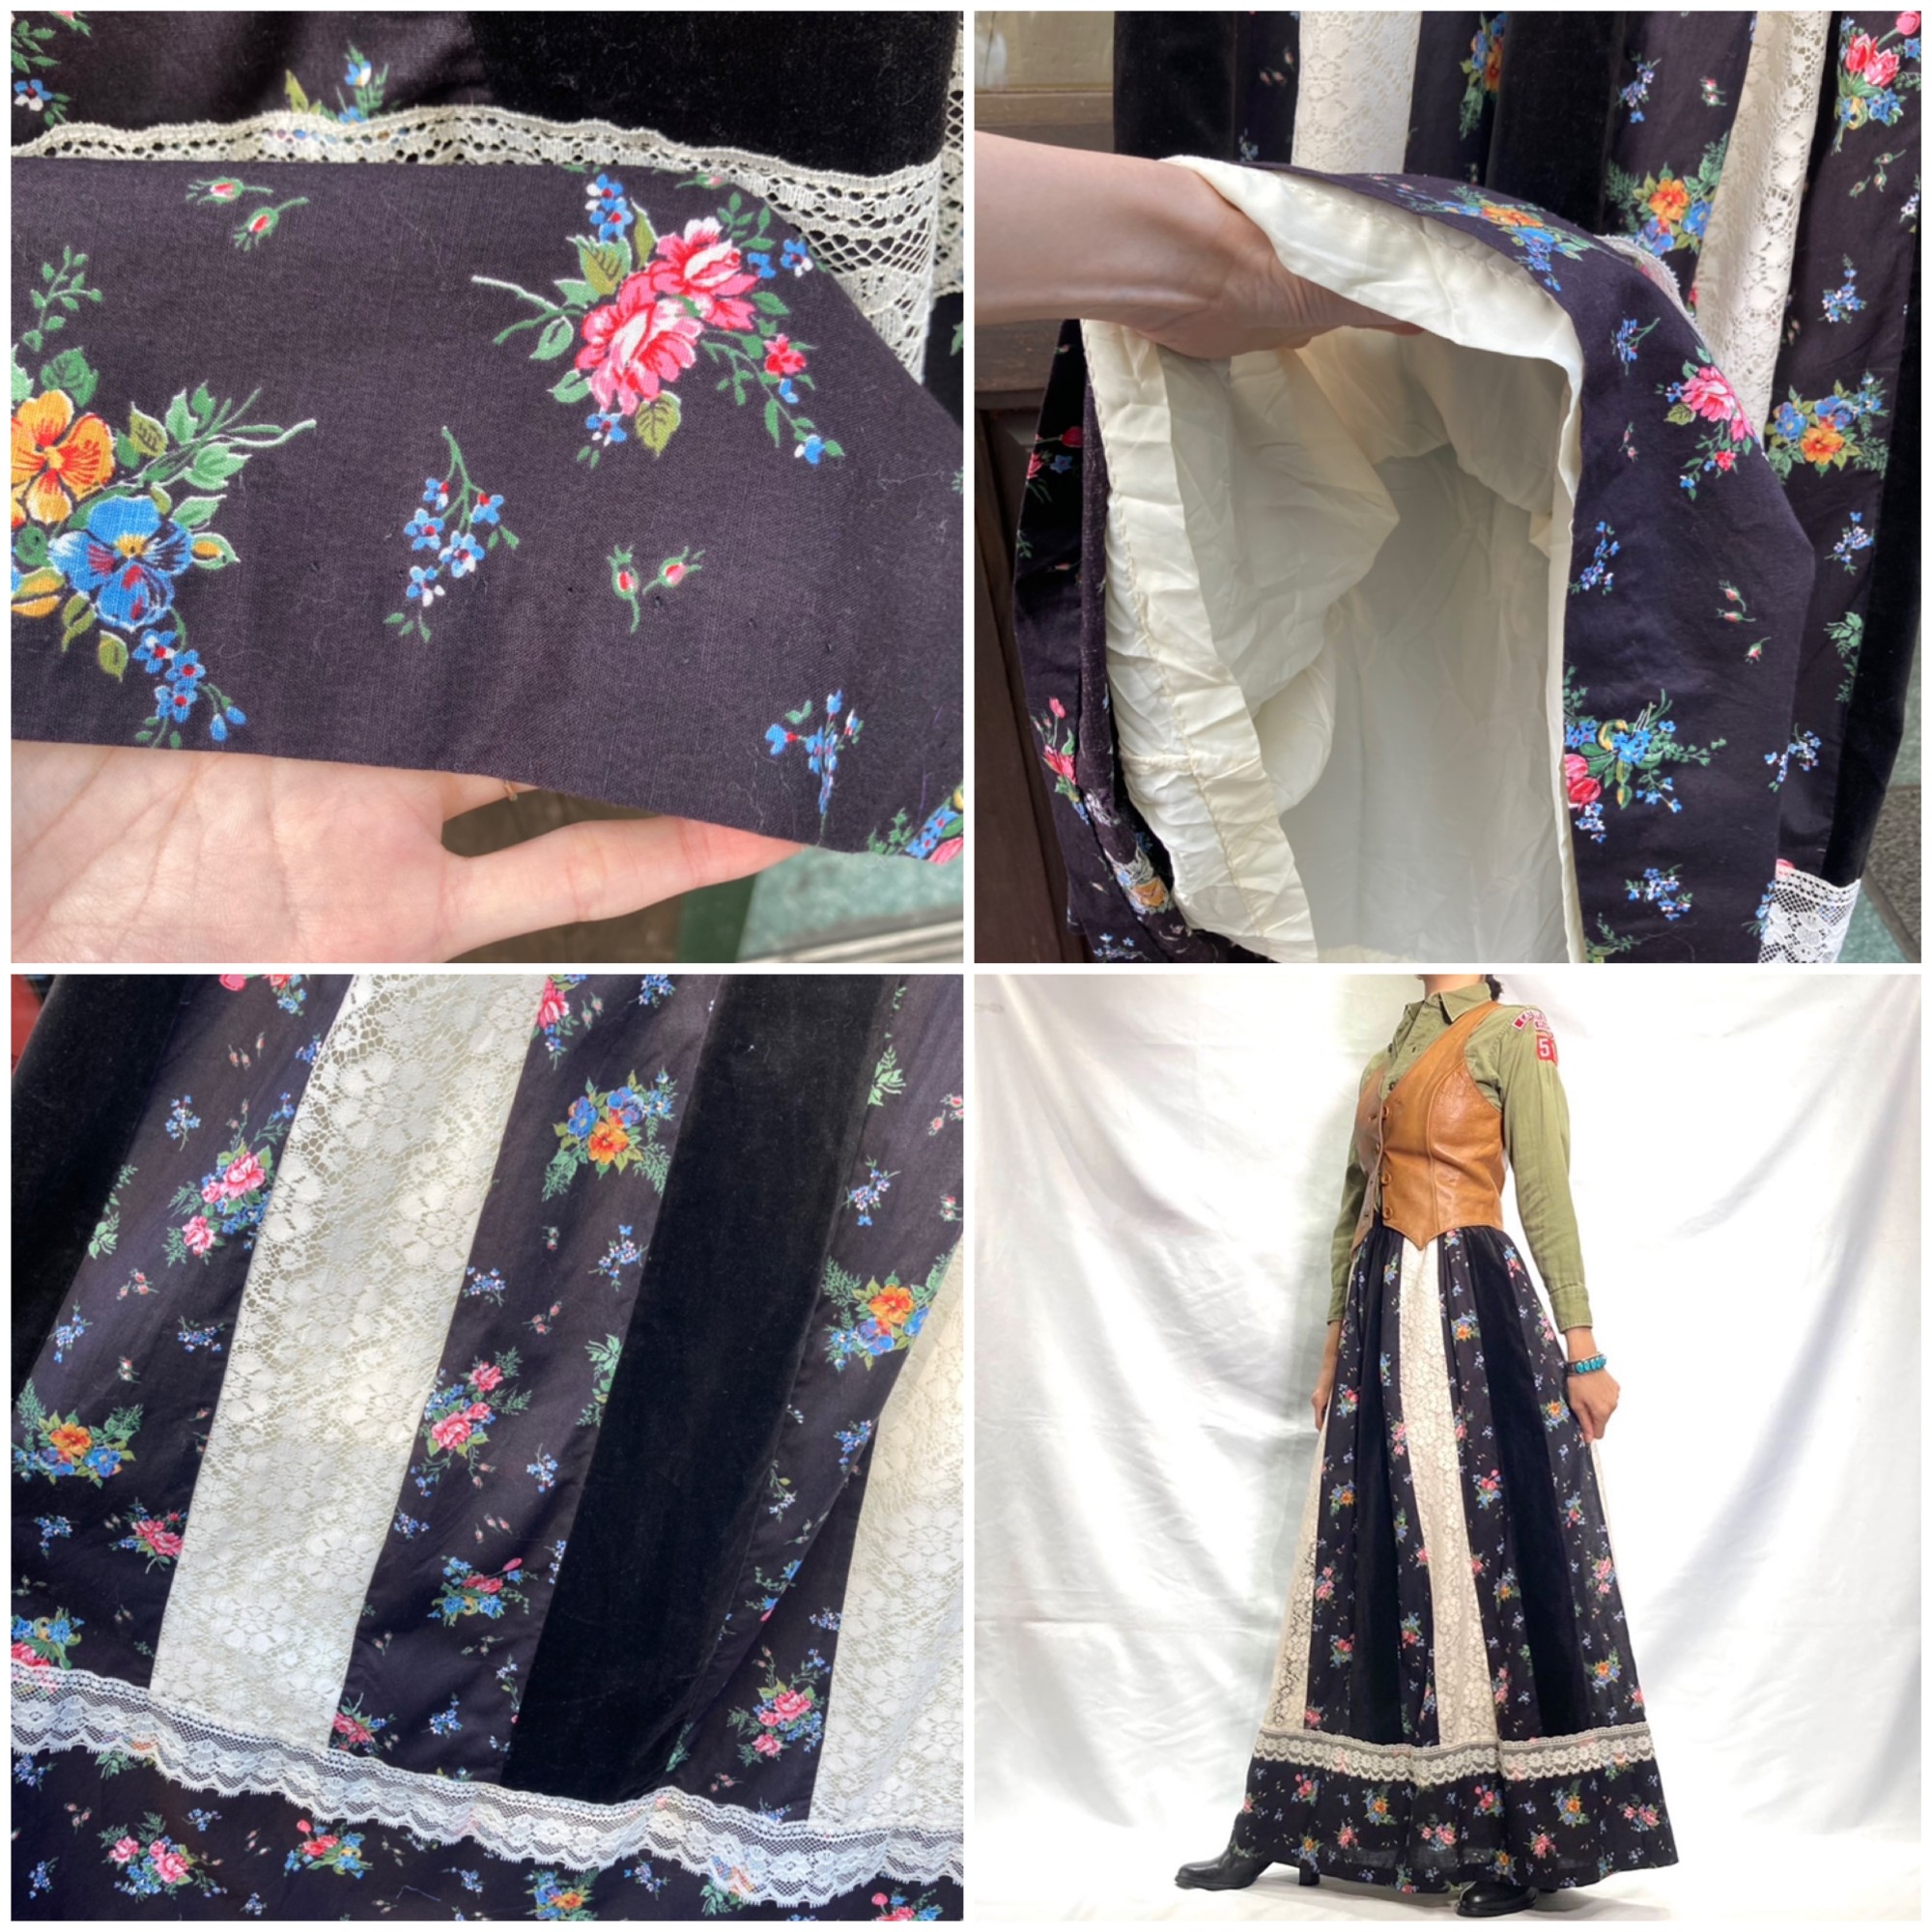 70s panel design / floral maxi skirt